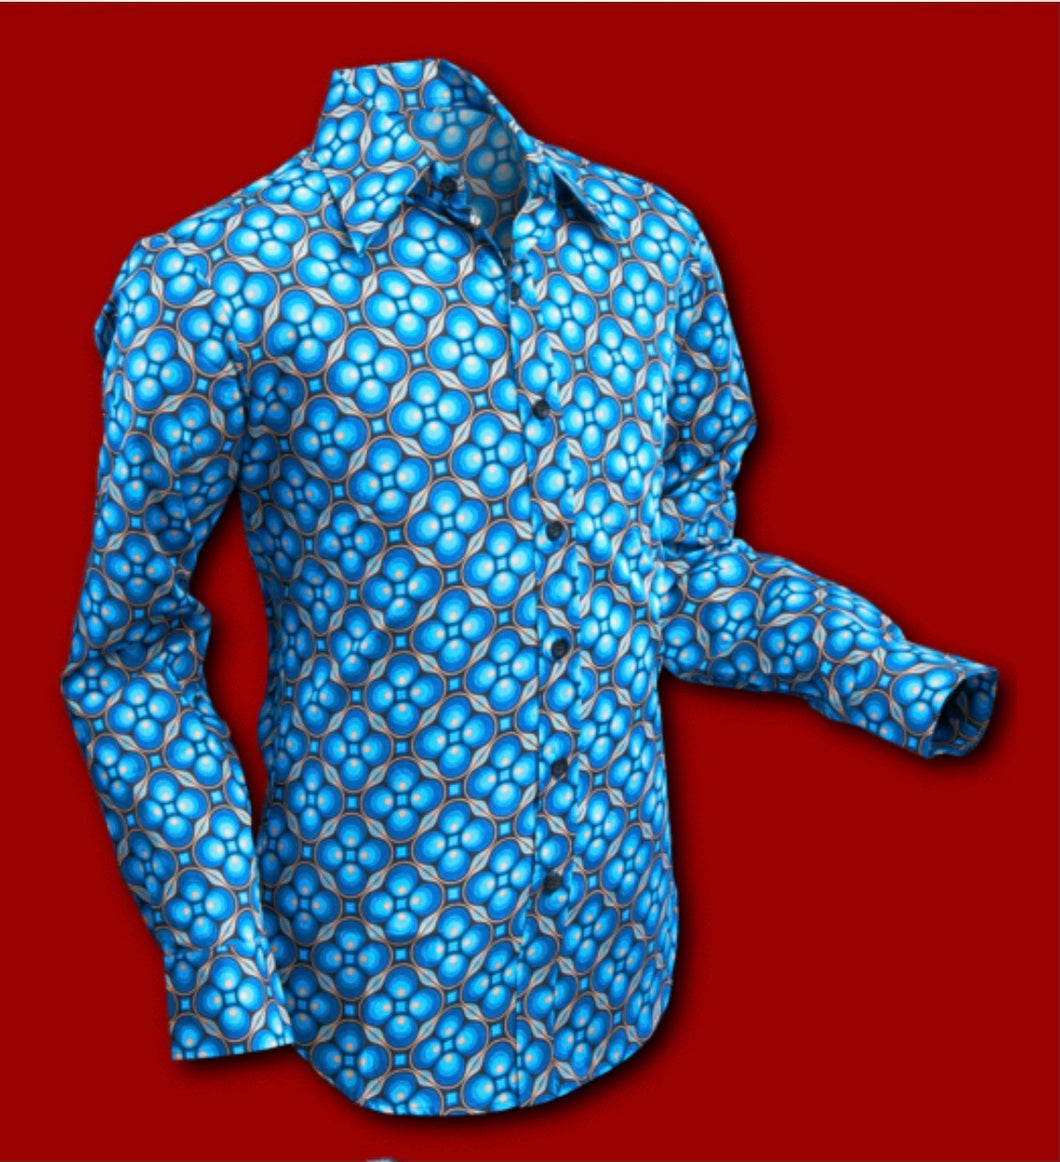 Dotsgrid design long sleeved Retro 70s style shirt in Black & Petrol